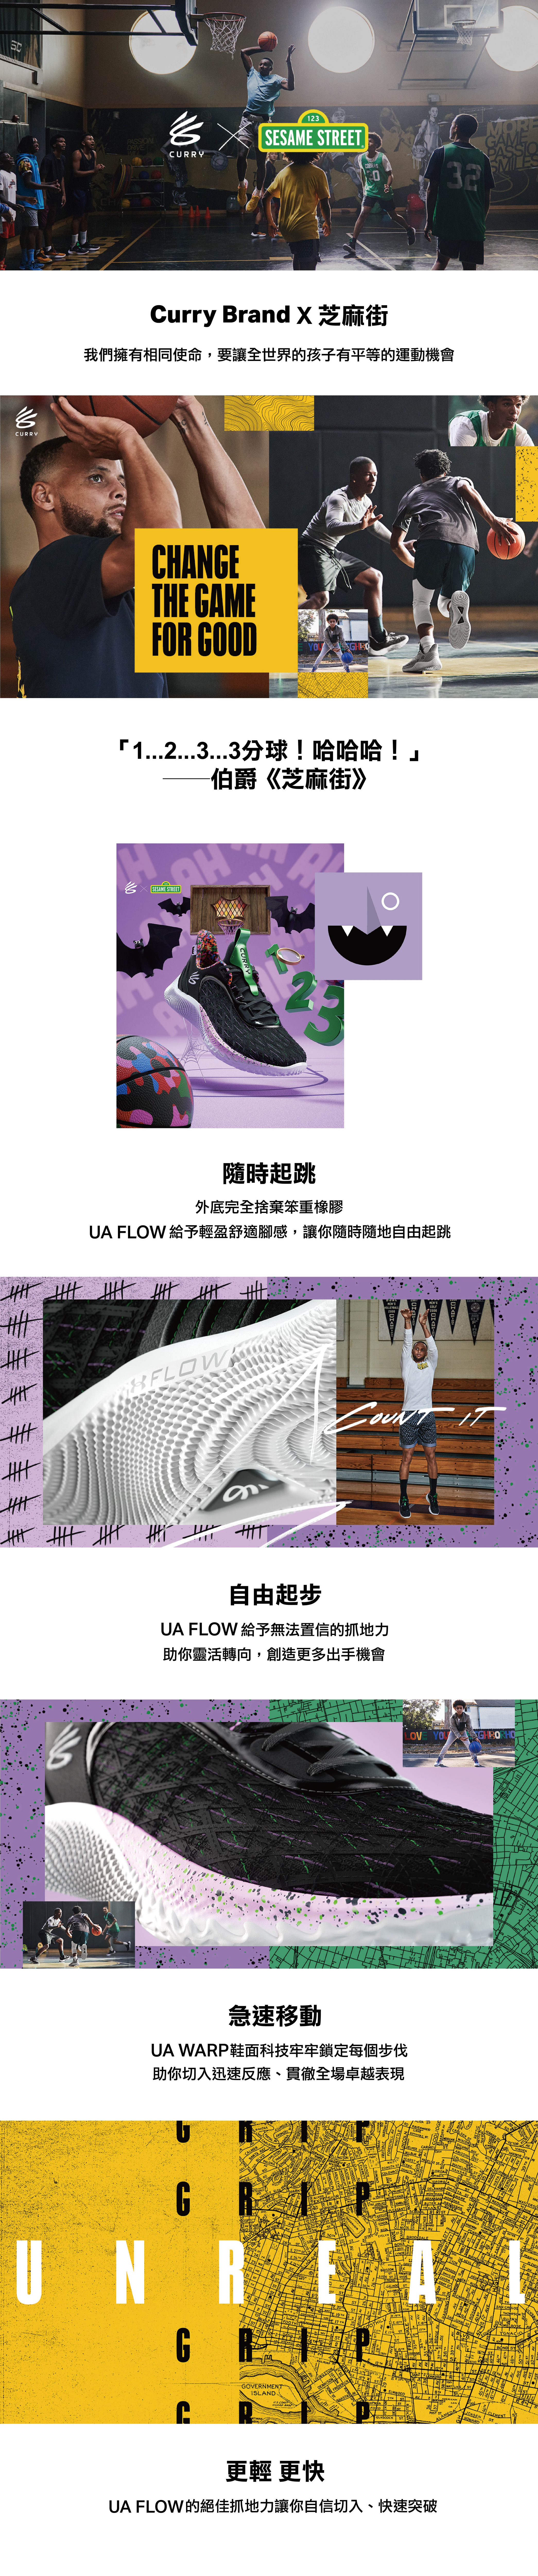 CURRY 9 籃球鞋 X 芝麻街伯爵